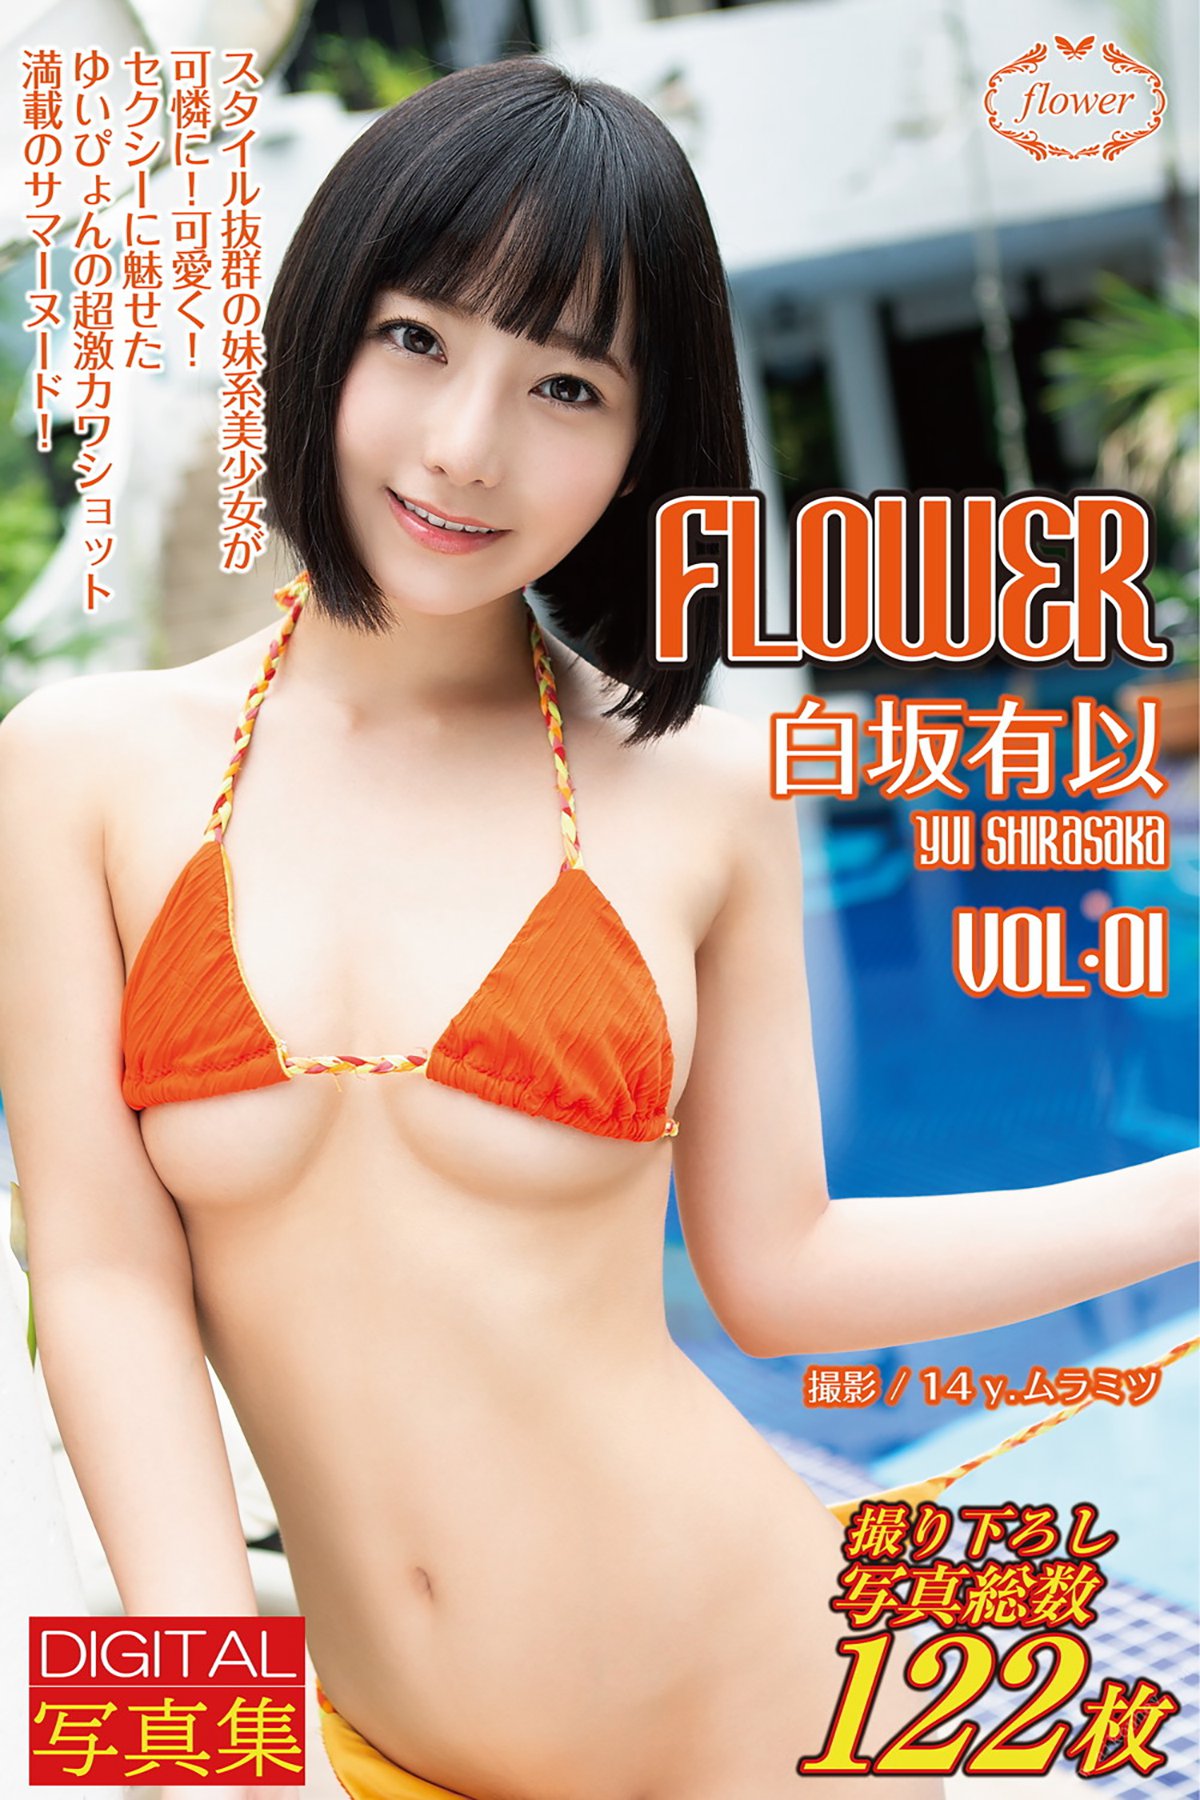 Flower Yui Shirasaka 白坂有以 – FLOWER Vol.01 2020-12-25